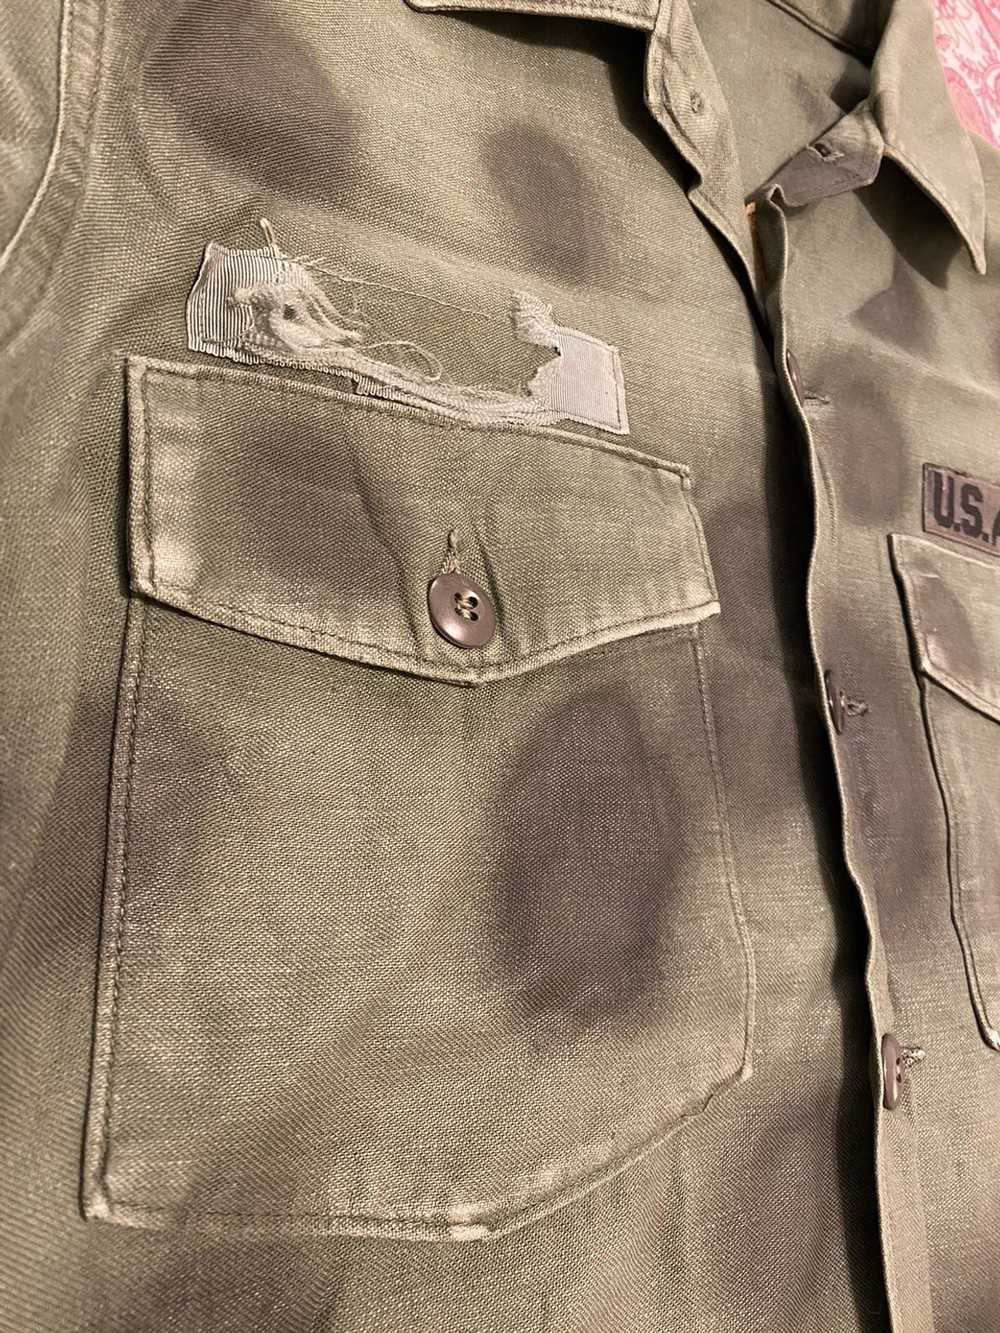 Vintage Vietnam War Era US Marines Jacket - image 7